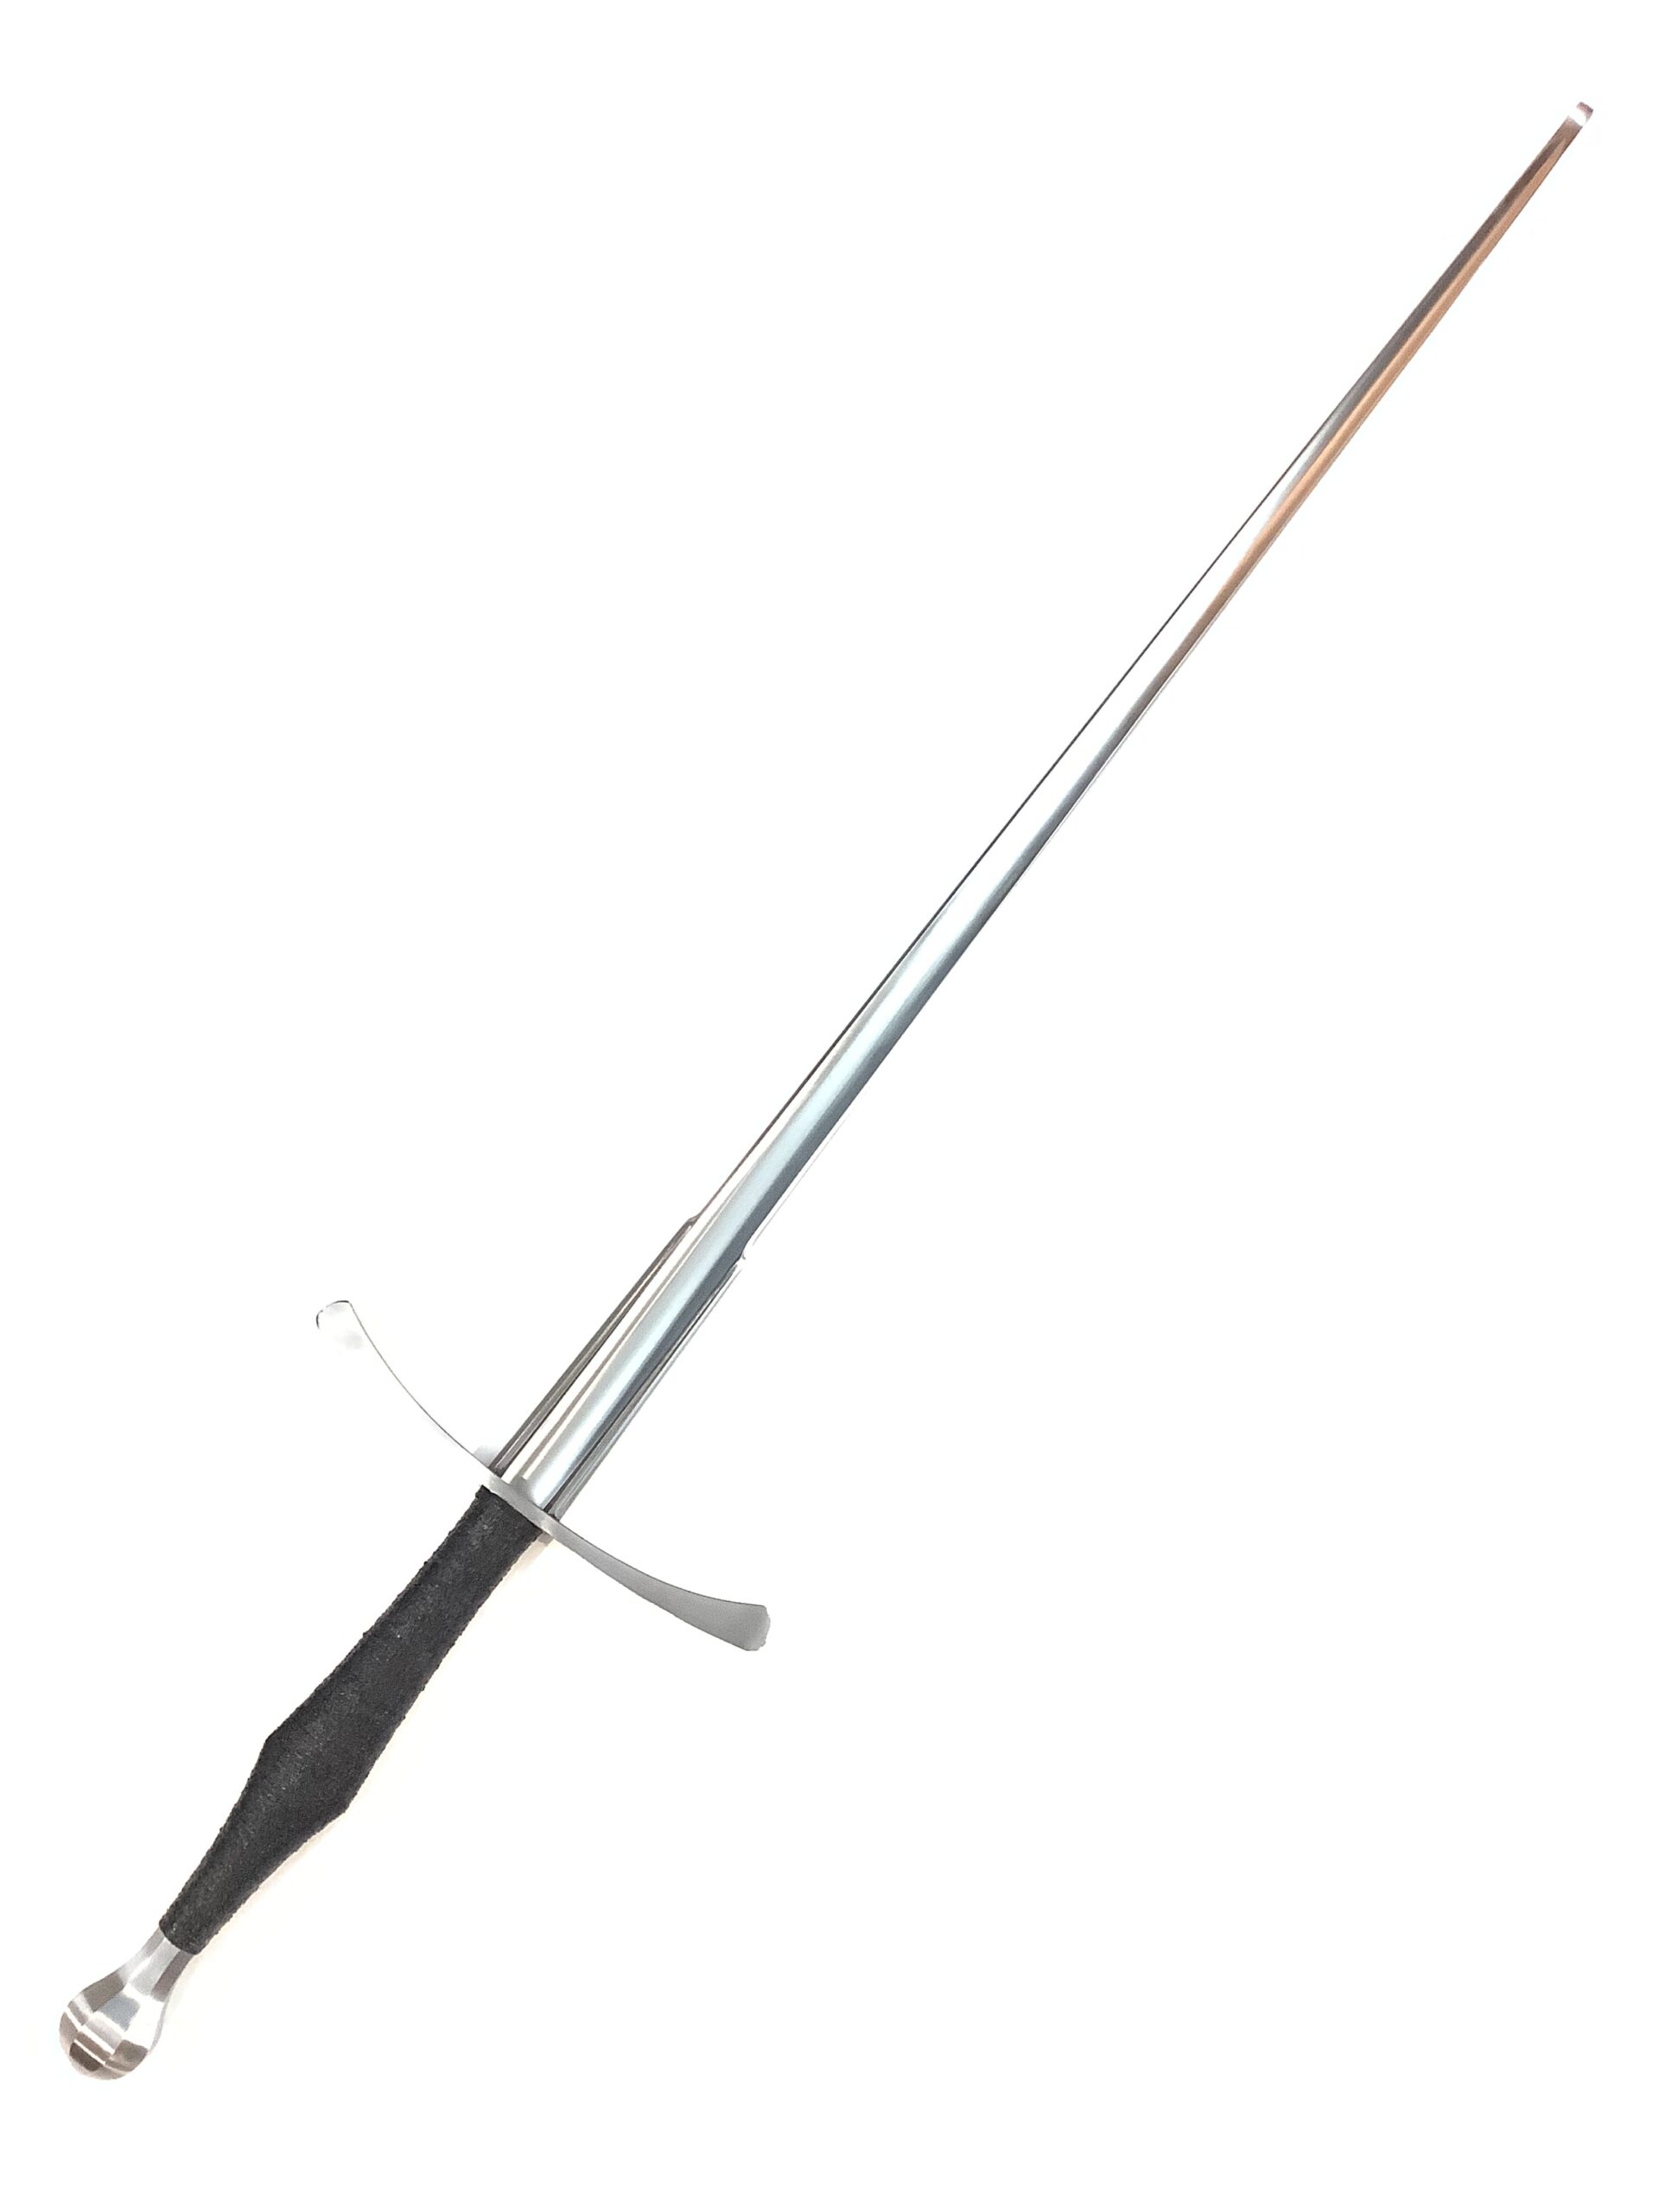 Chlebowski Fencing Sword III Black (1)